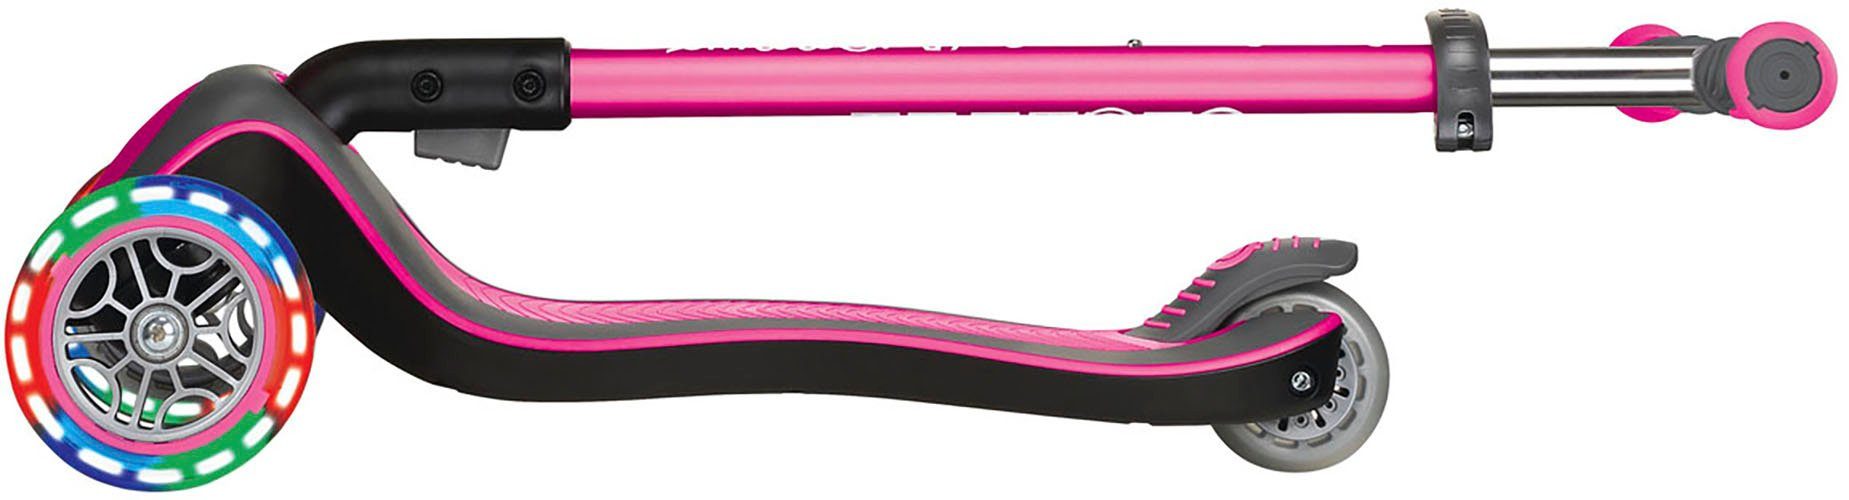 LIGHTS, mit Dreiradscooter DELUXE ELITE pink authentic sports Leuchtrollen Globber toys &